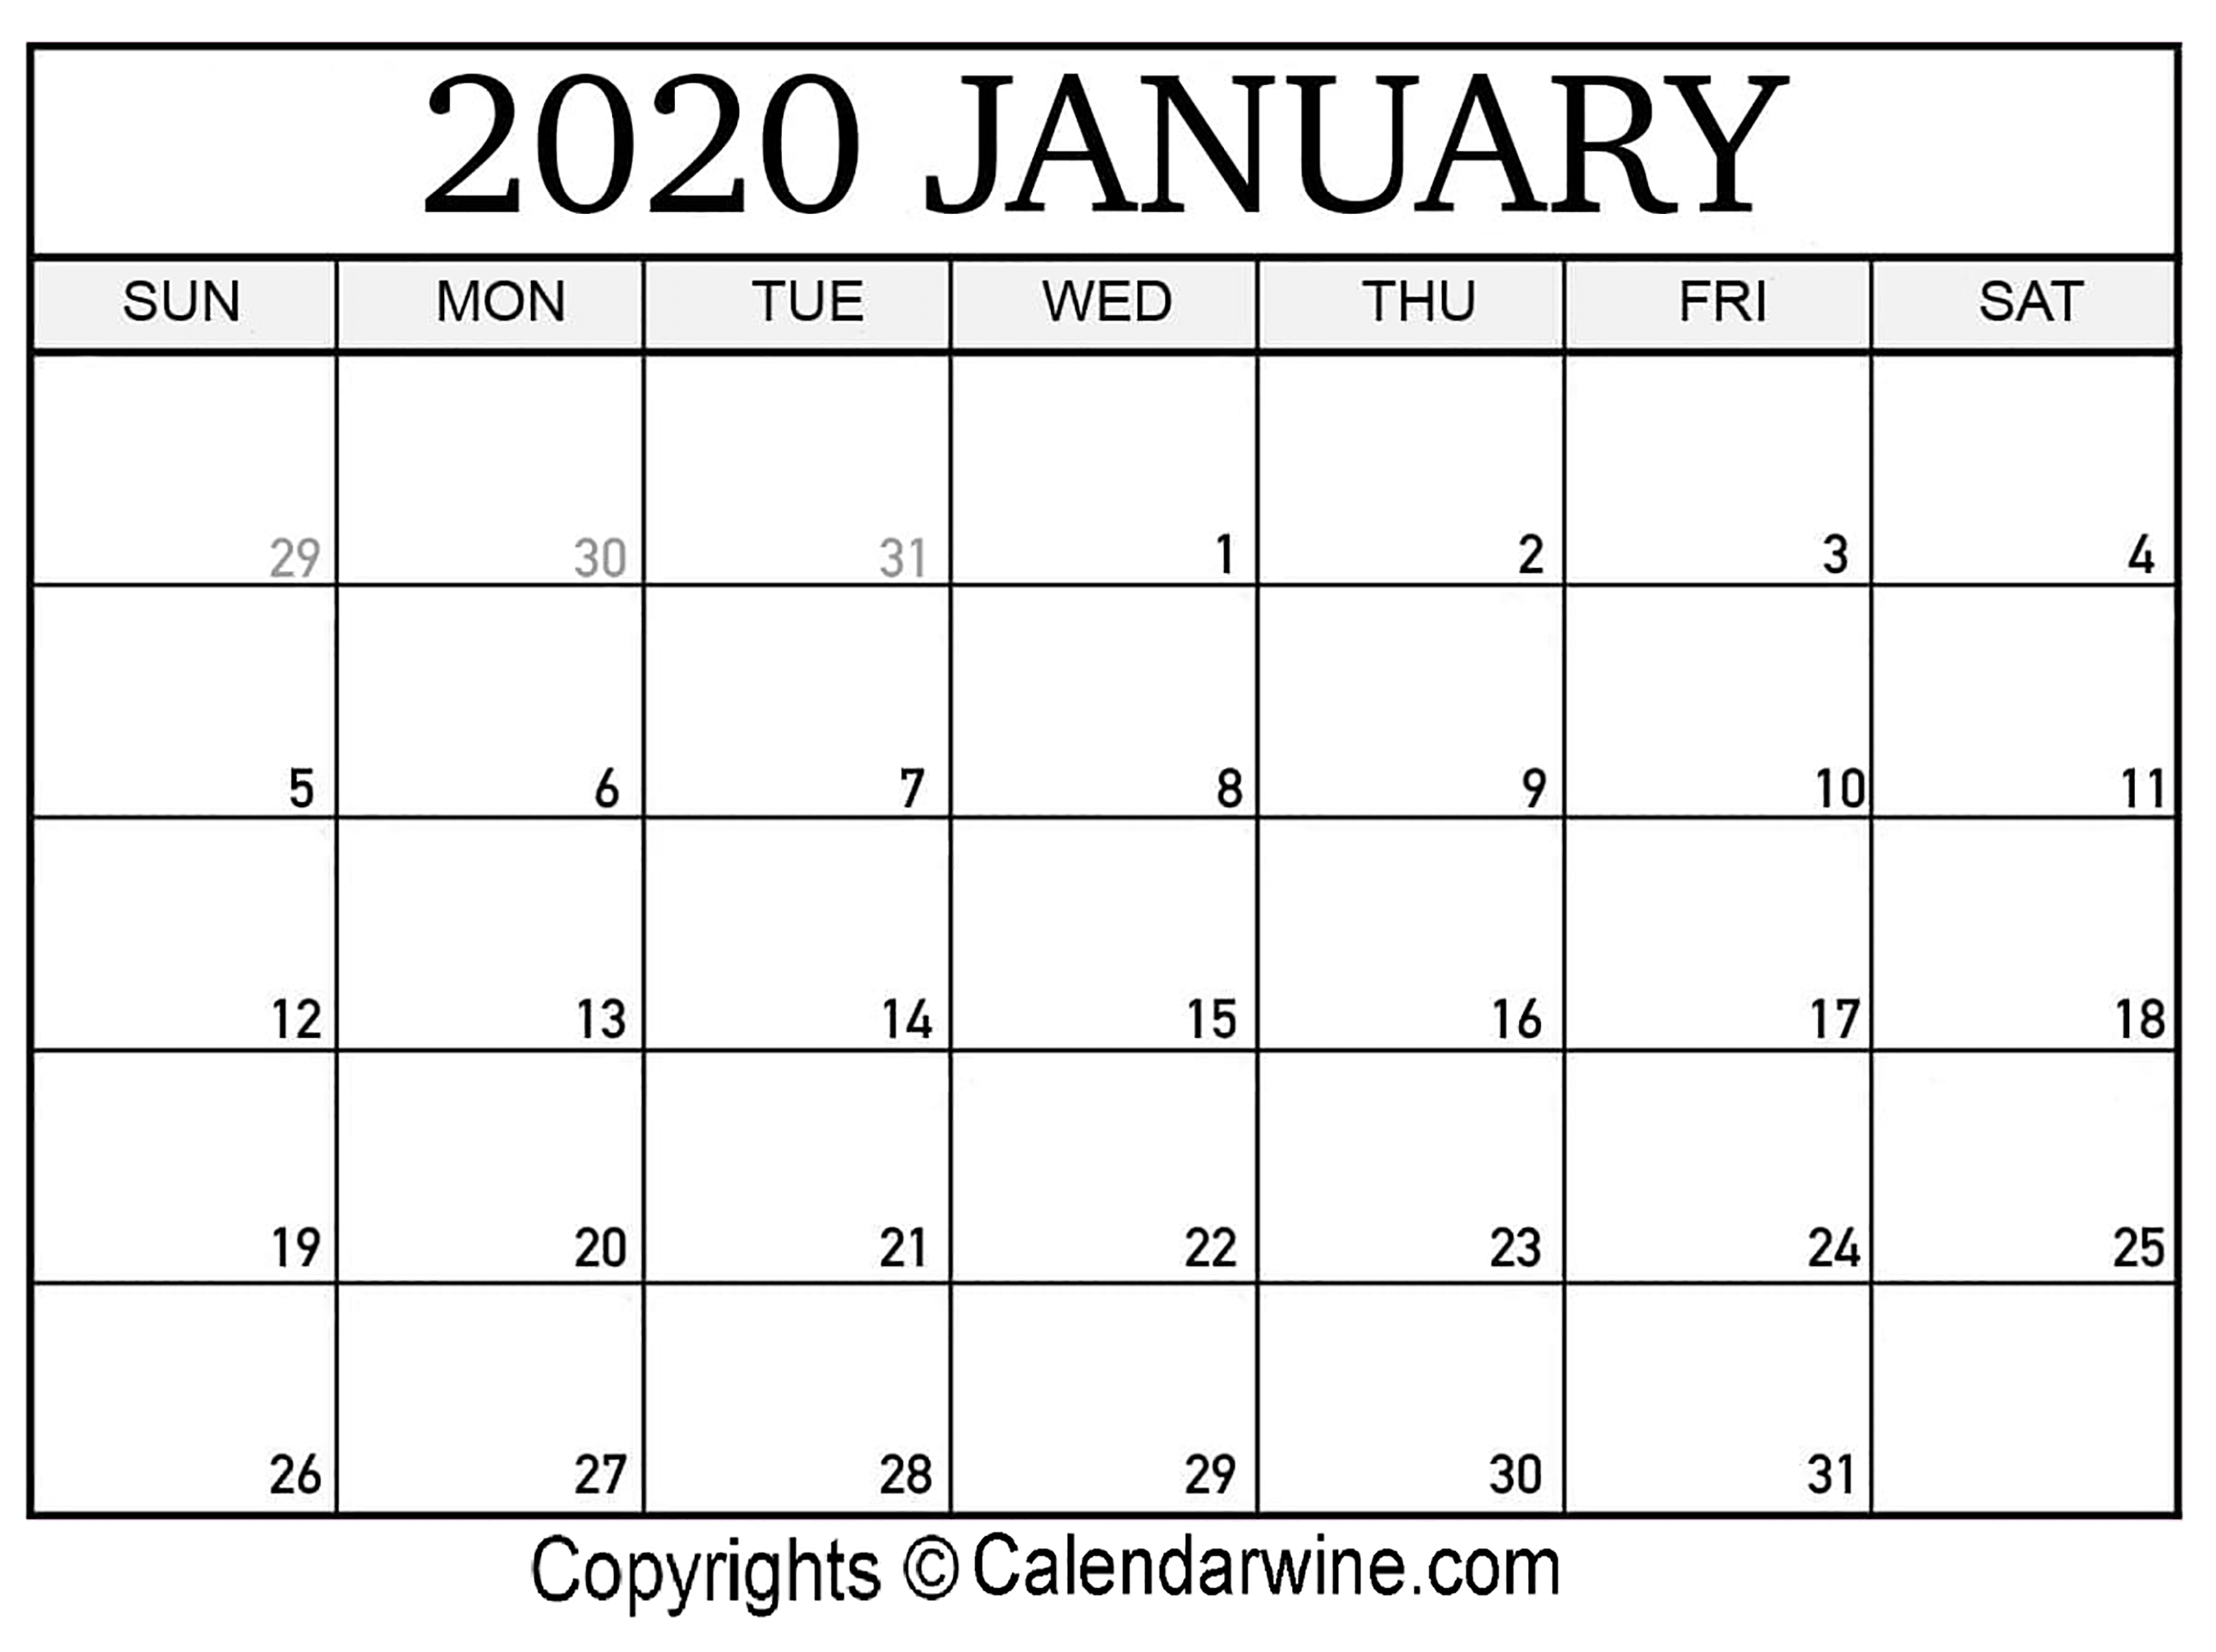 January 2020 Printable Calendar Templates | Calendar Wine